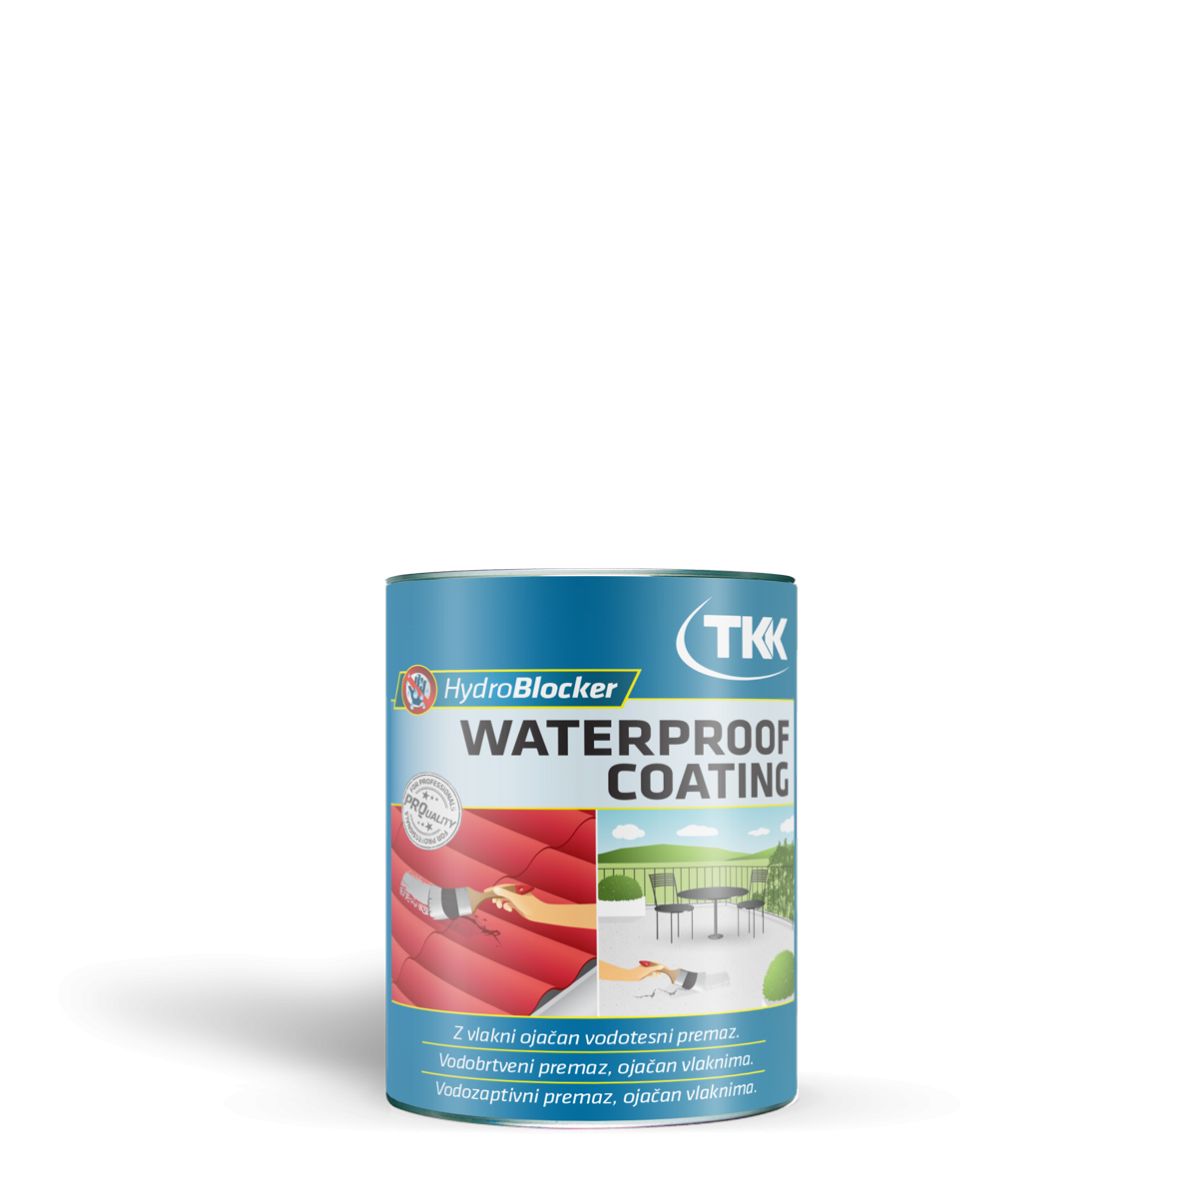 Hydroblocker waterproof coating 1kg